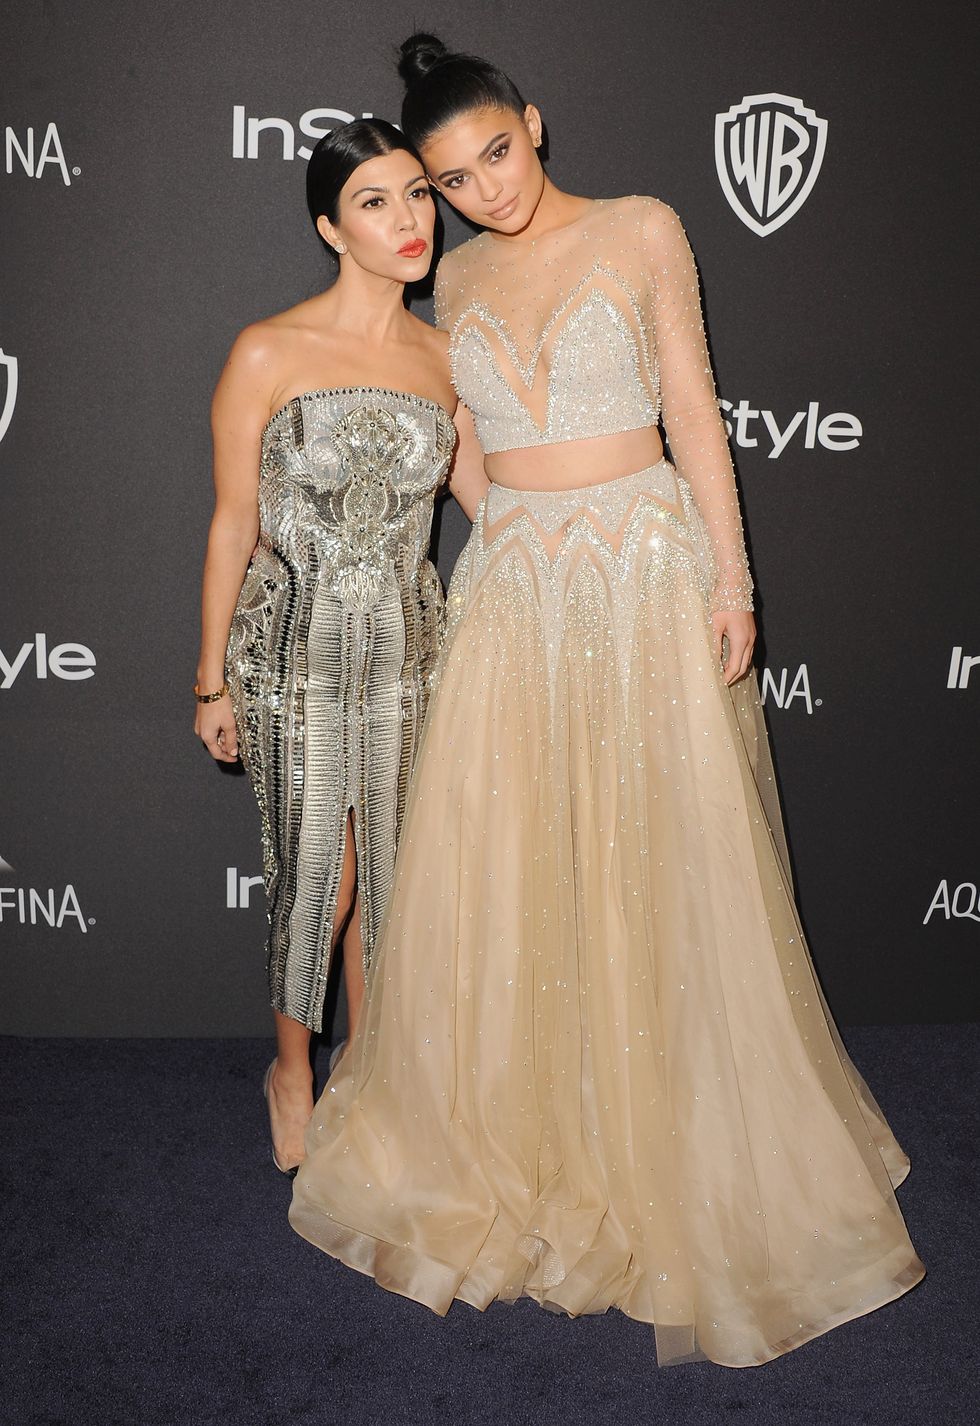 Kourtney Kardashian and Kylie Jenner at the 2016 Golden Globes after party